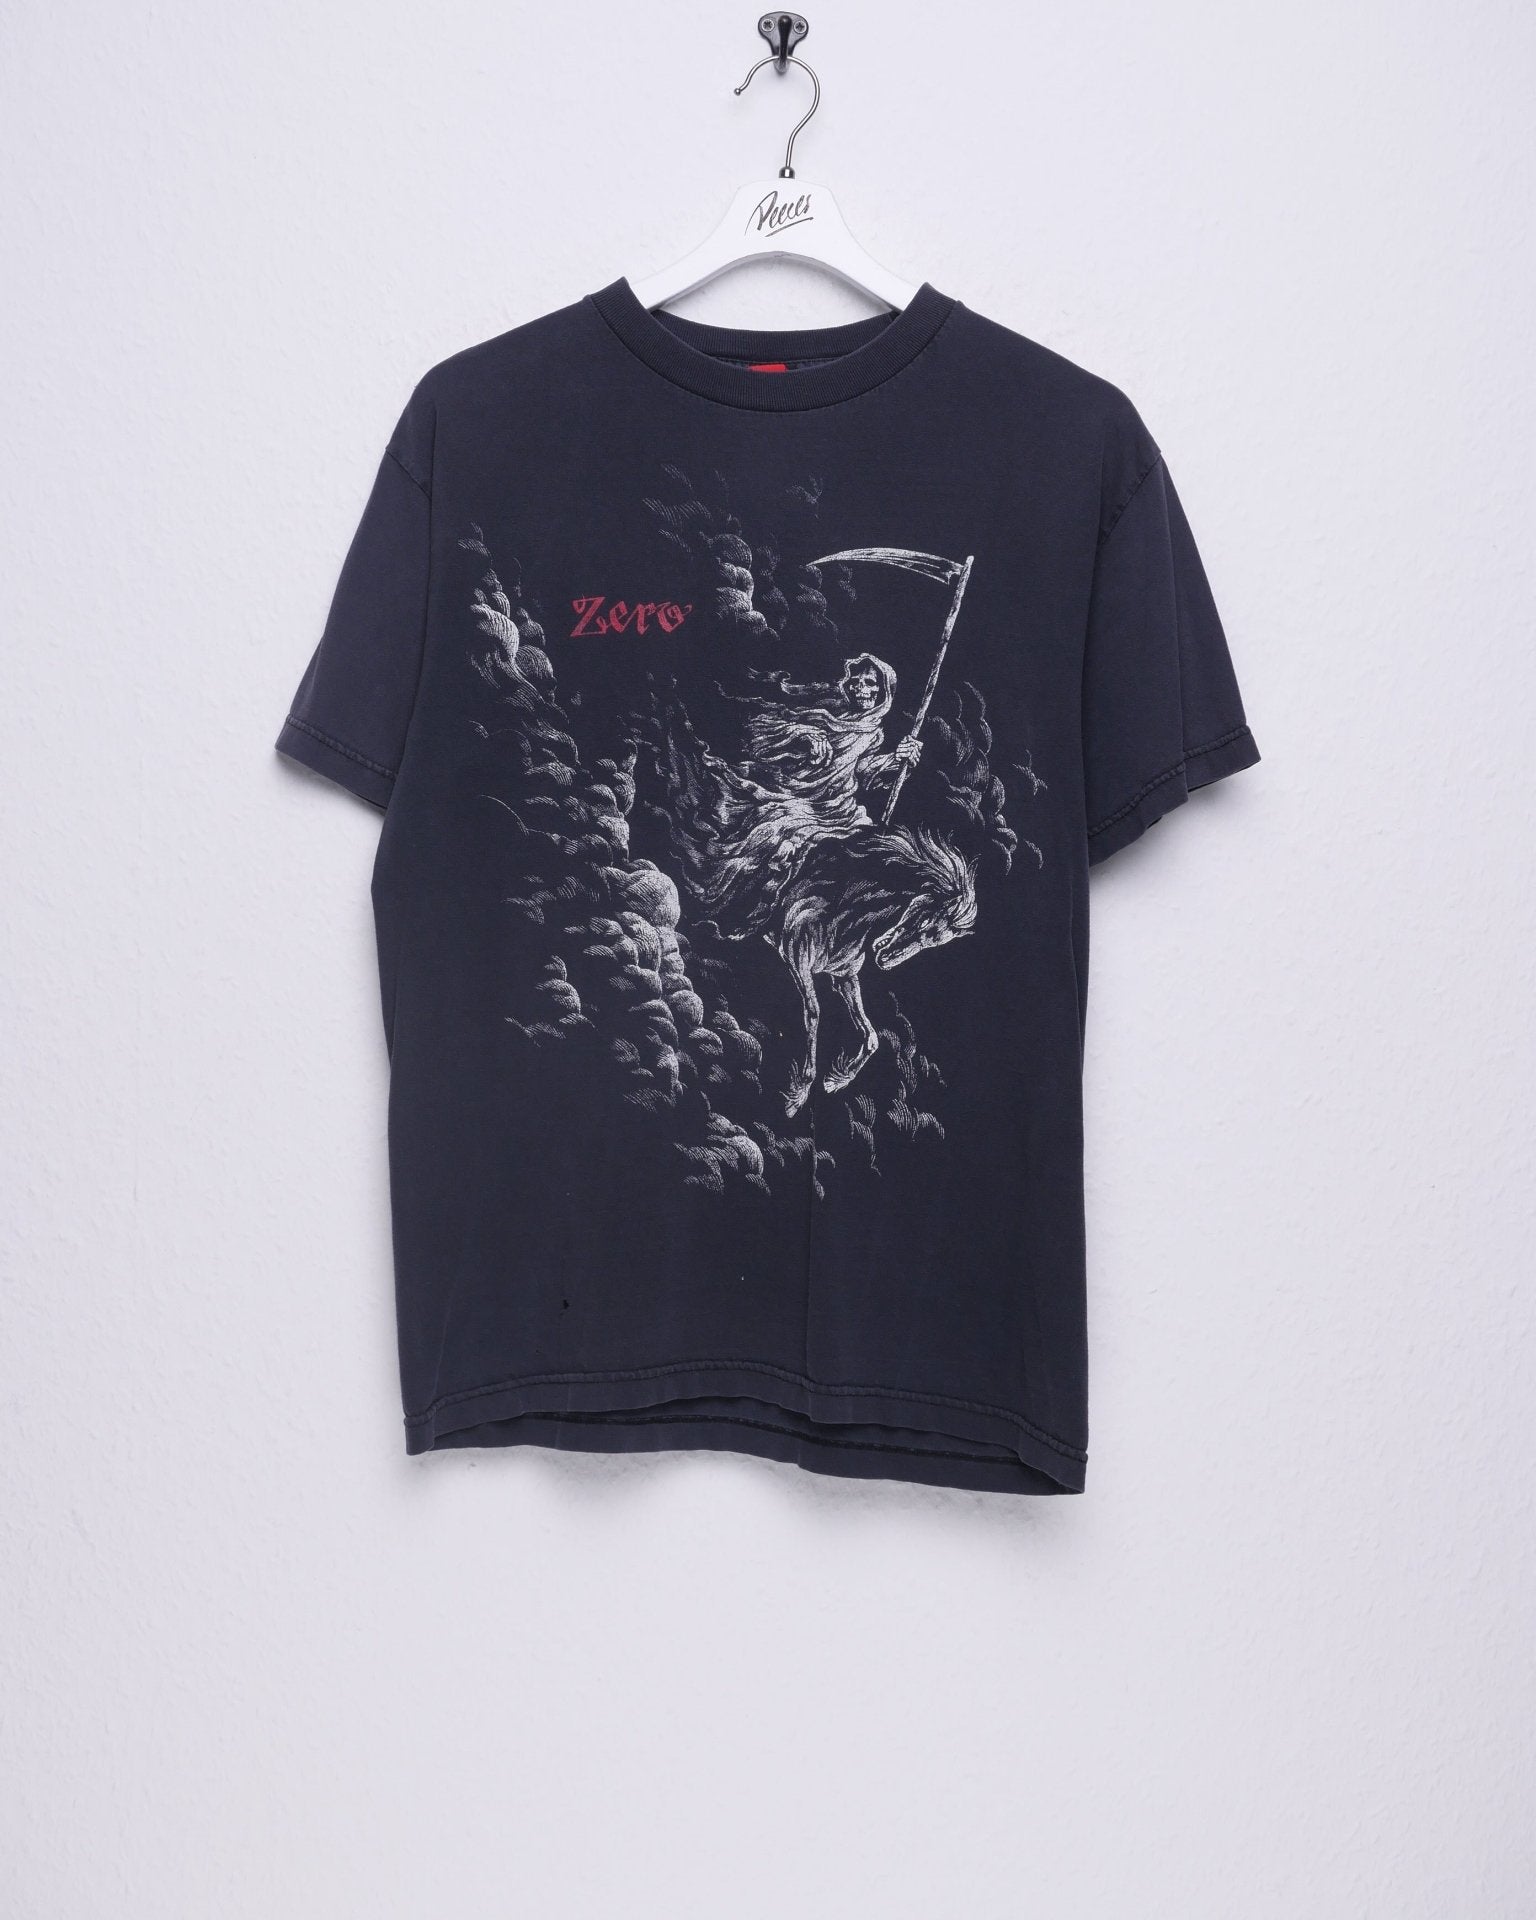 'Zero' printed Graphic black washed Shirt - Peeces